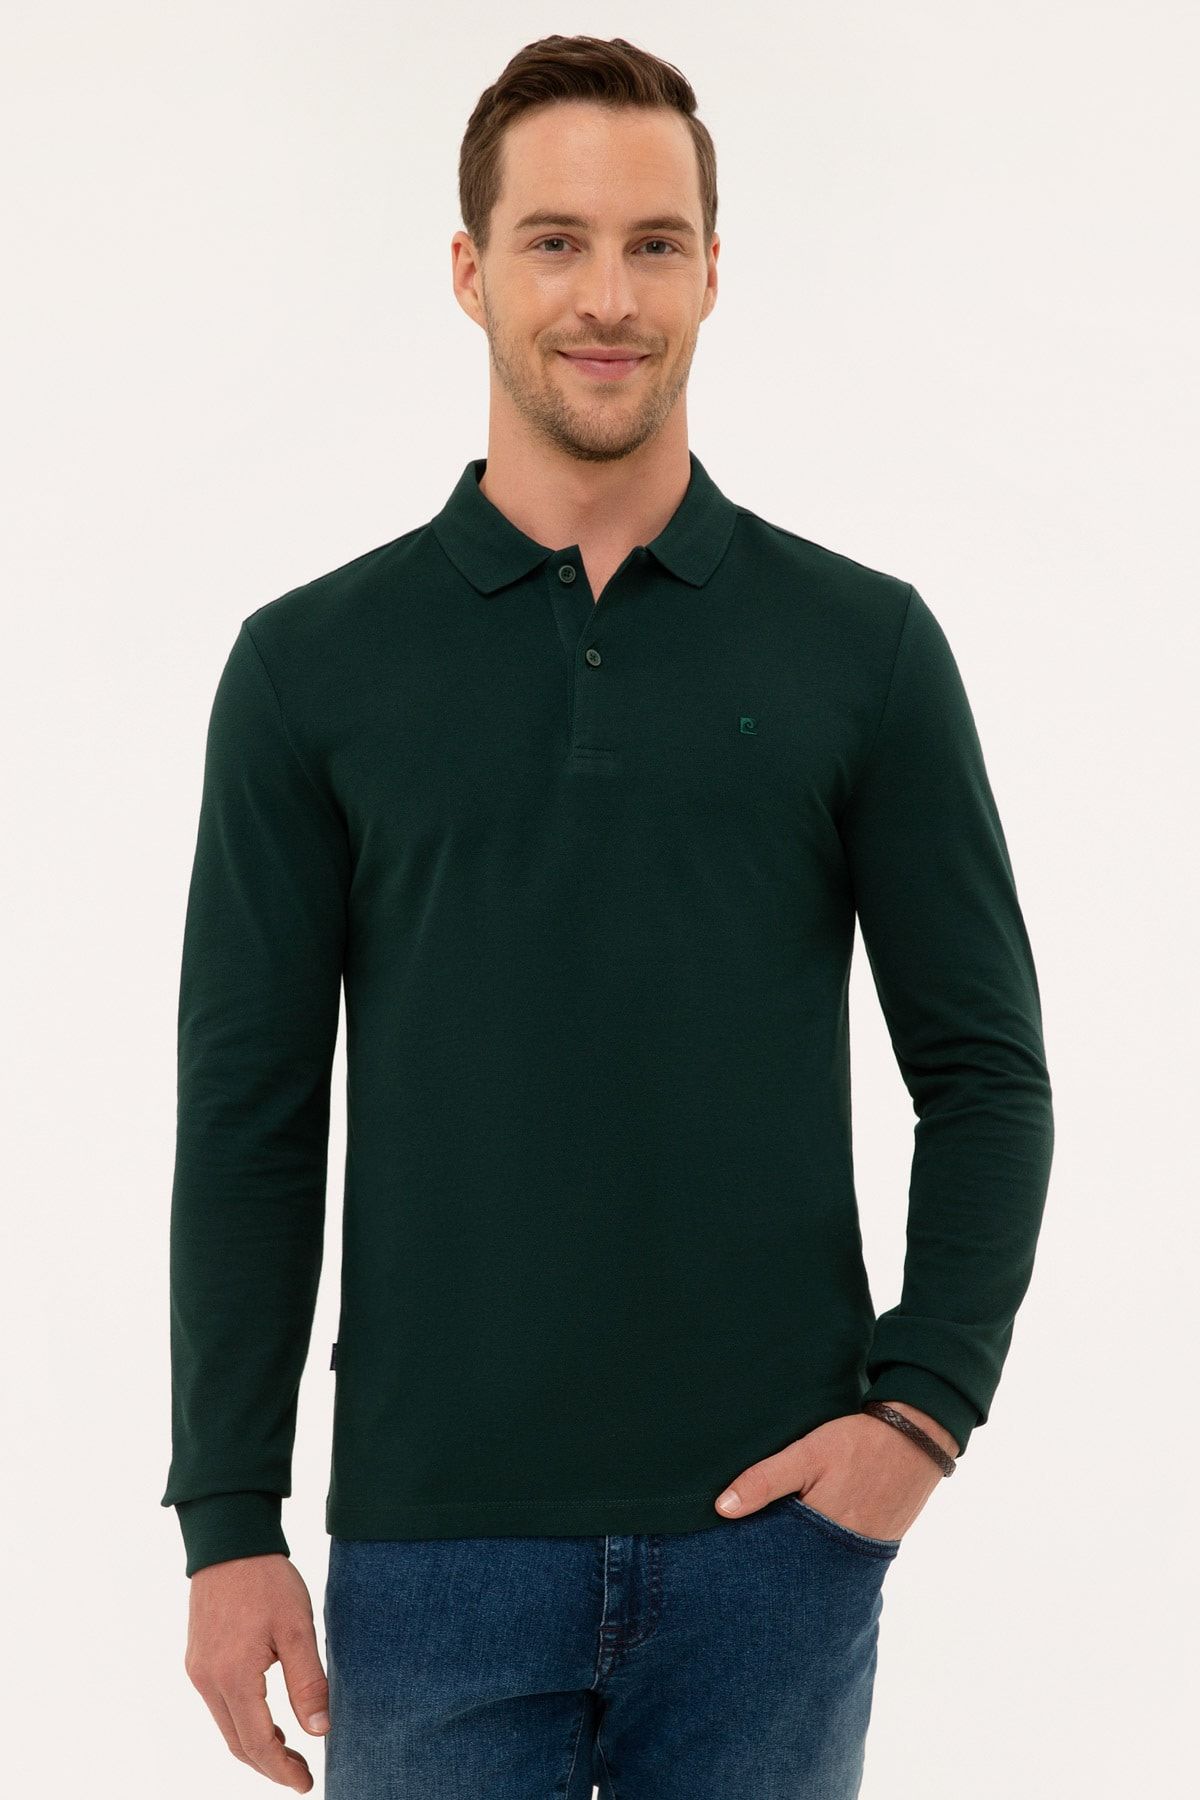 Pierre Cardin Erkek Koyu Yeşil Slim Fit Polo Yaka Sweatshirt G021GL082.000.1100692